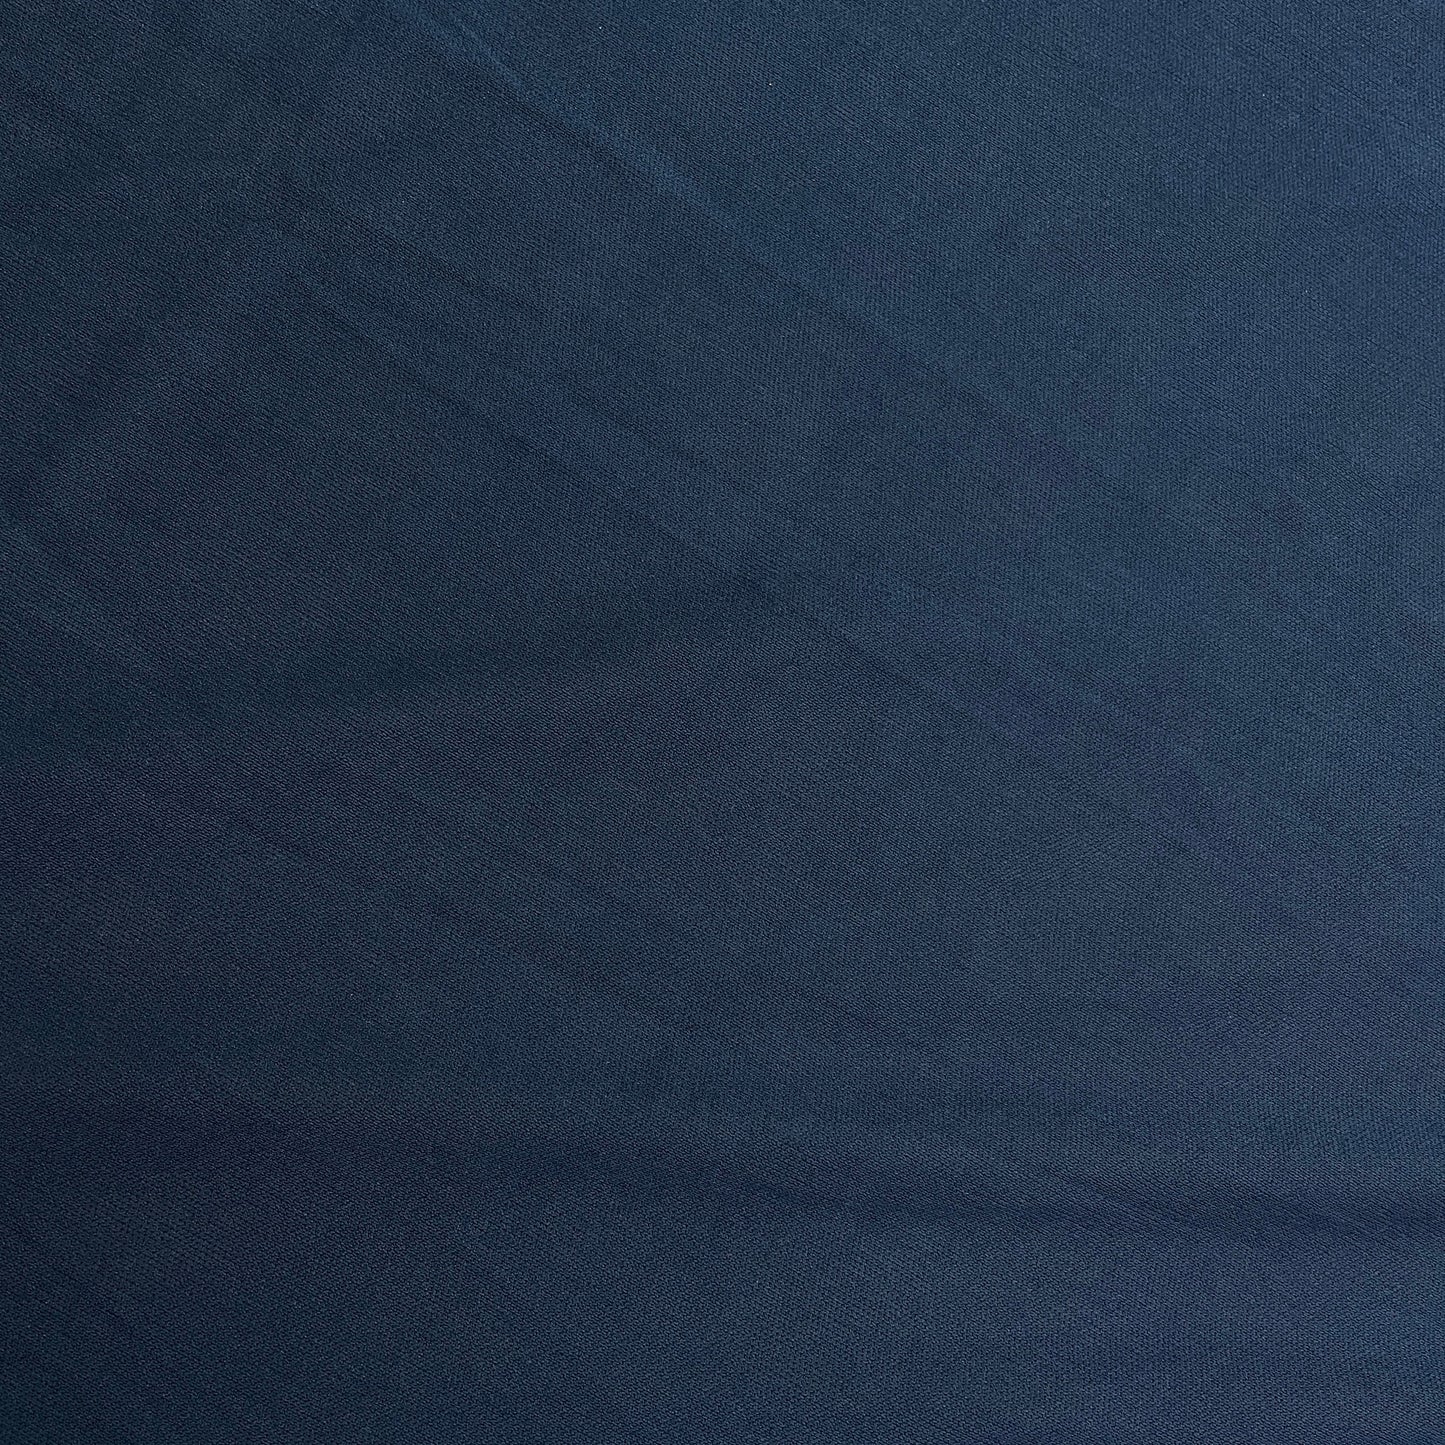 Blue Solid Lycra Fabric